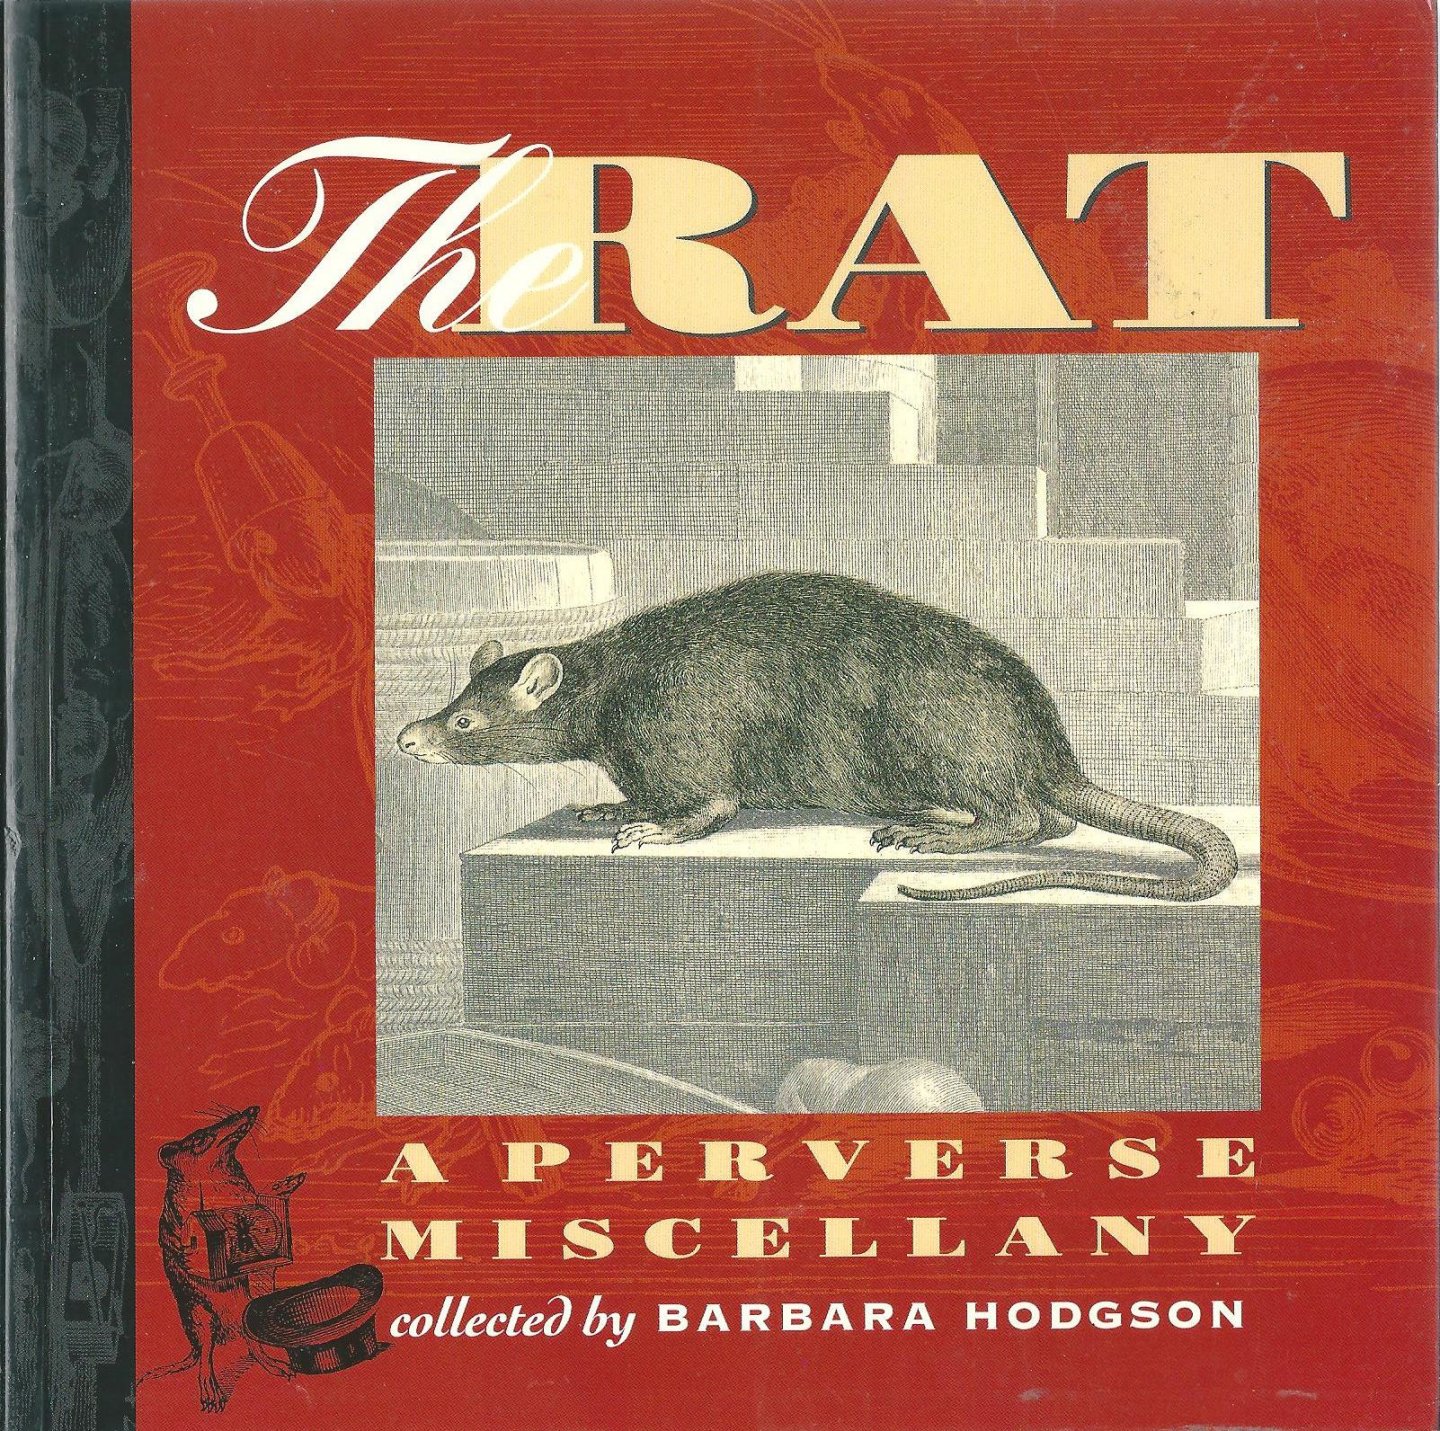 Hodgson, Barbara - The rat : a perverse miscellany / collected by Barbara Hodgson